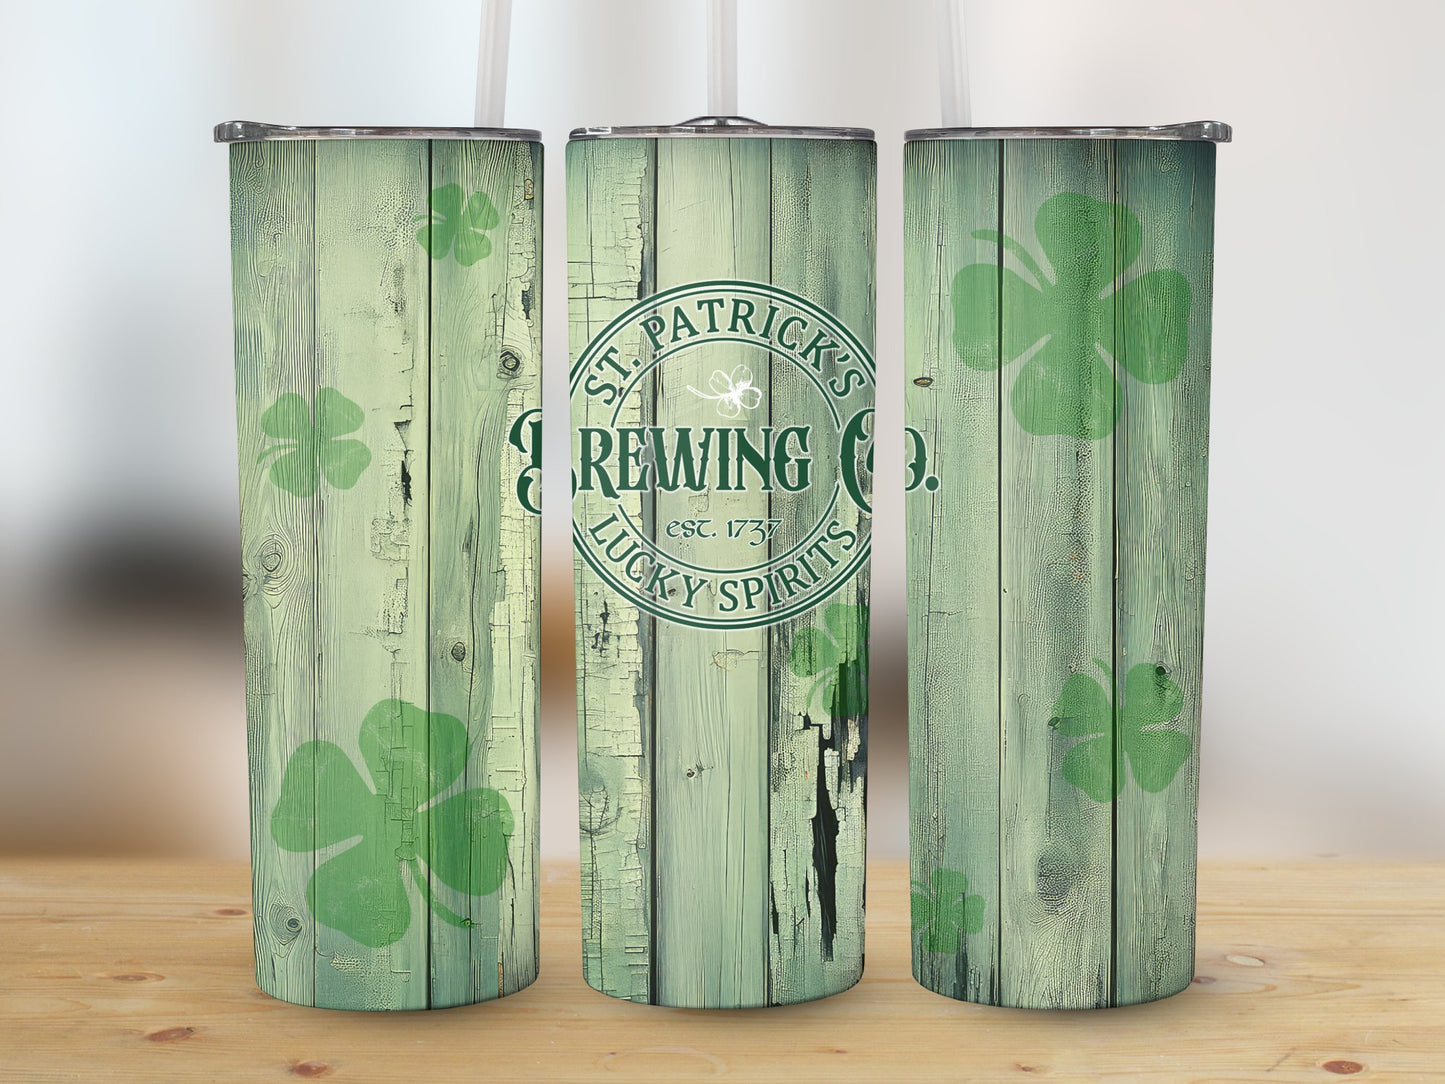 St. Patrick's Brewing Company Lucky Spirits (St. Patrick's Tumbler)